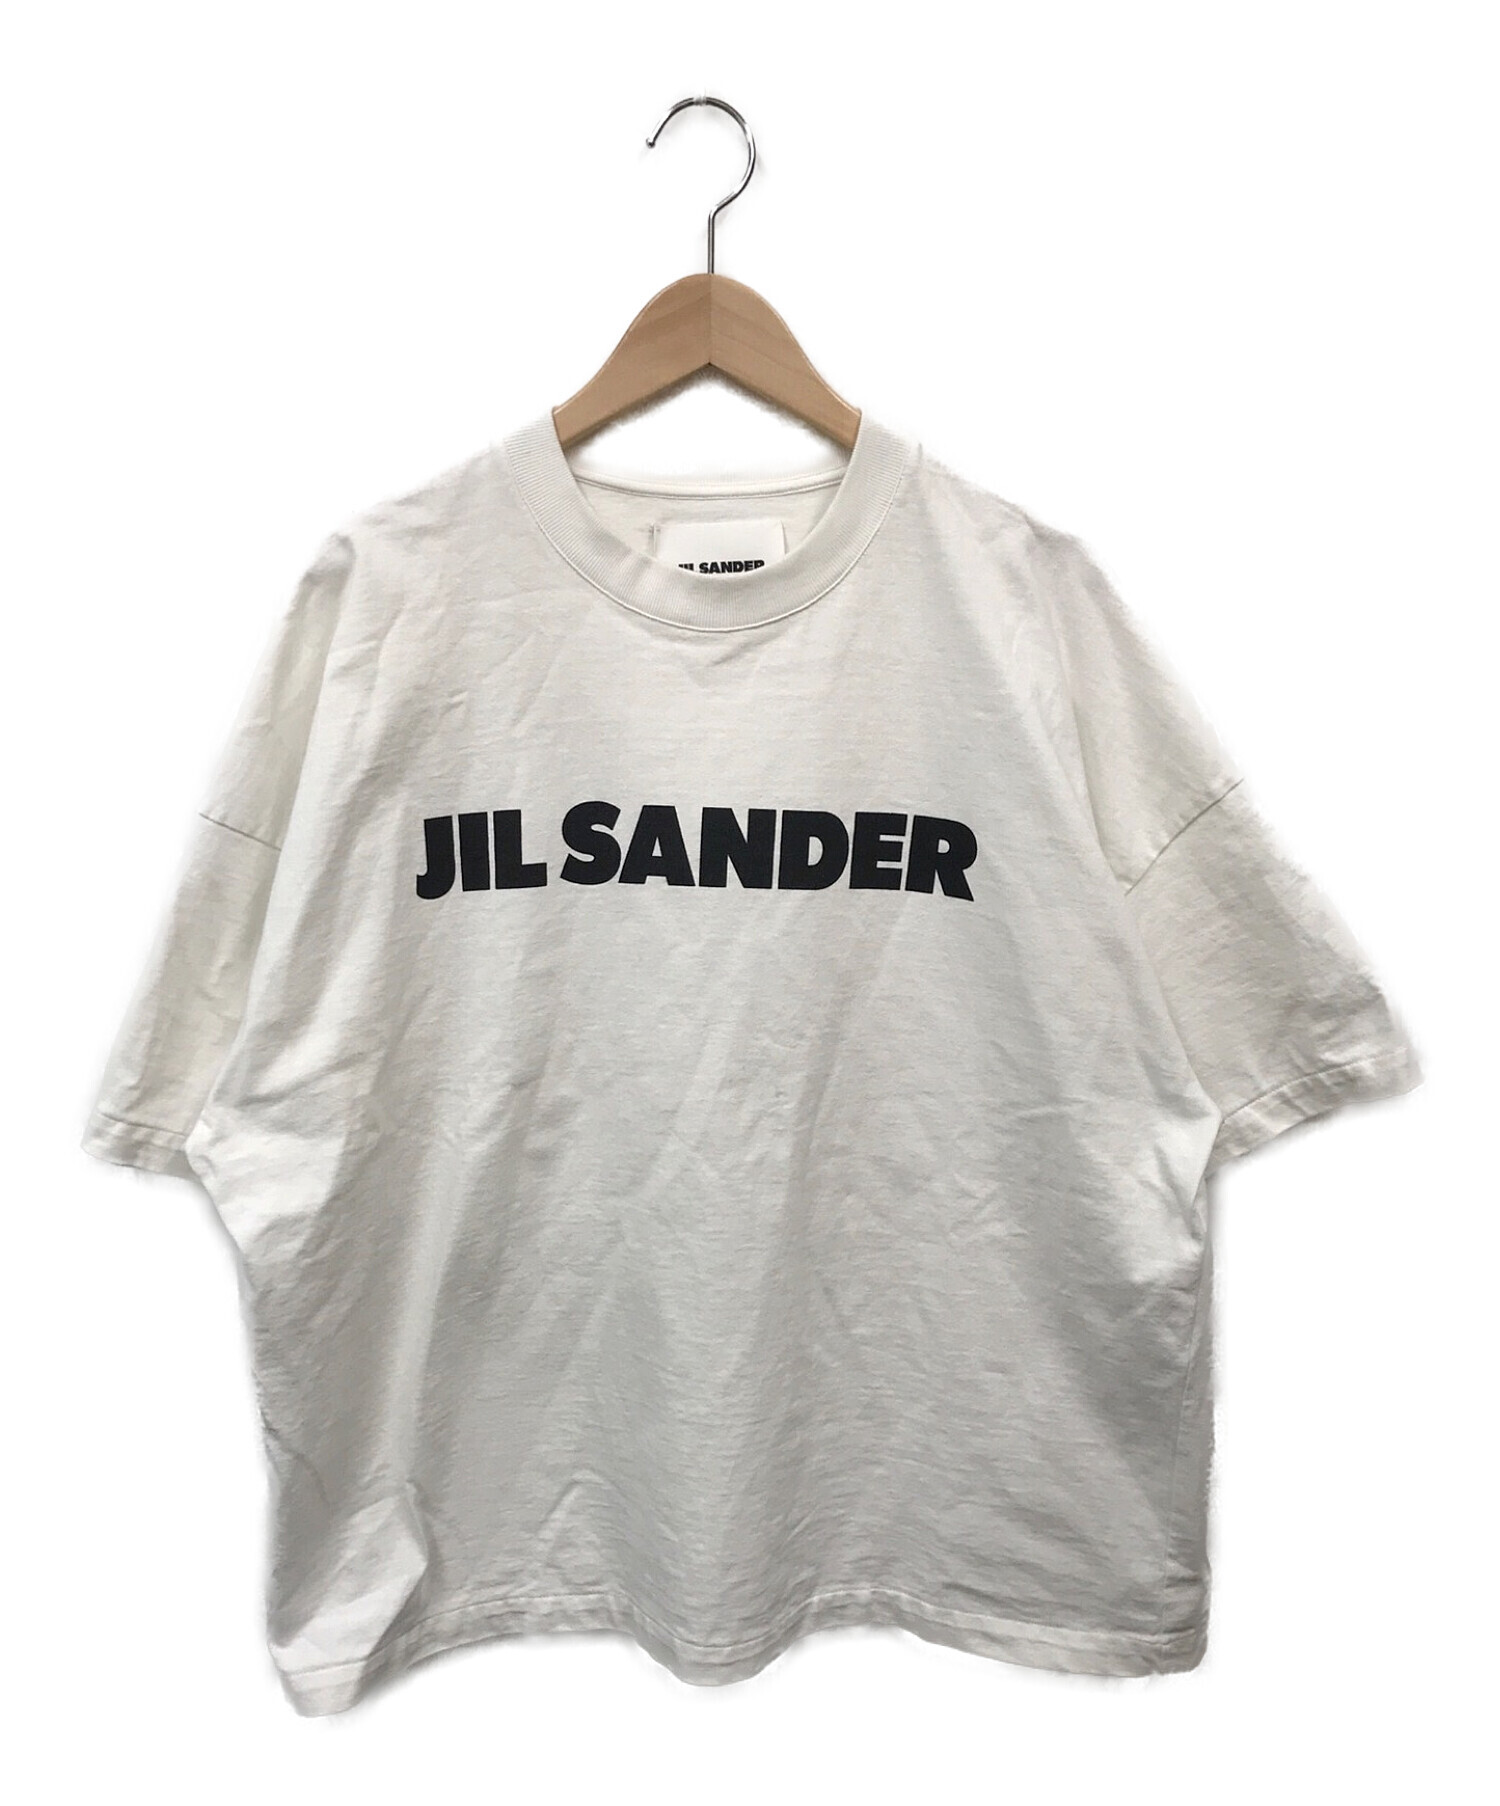 JIL SANDER (ジルサンダー) Tシャツ ホワイト サイズ:L